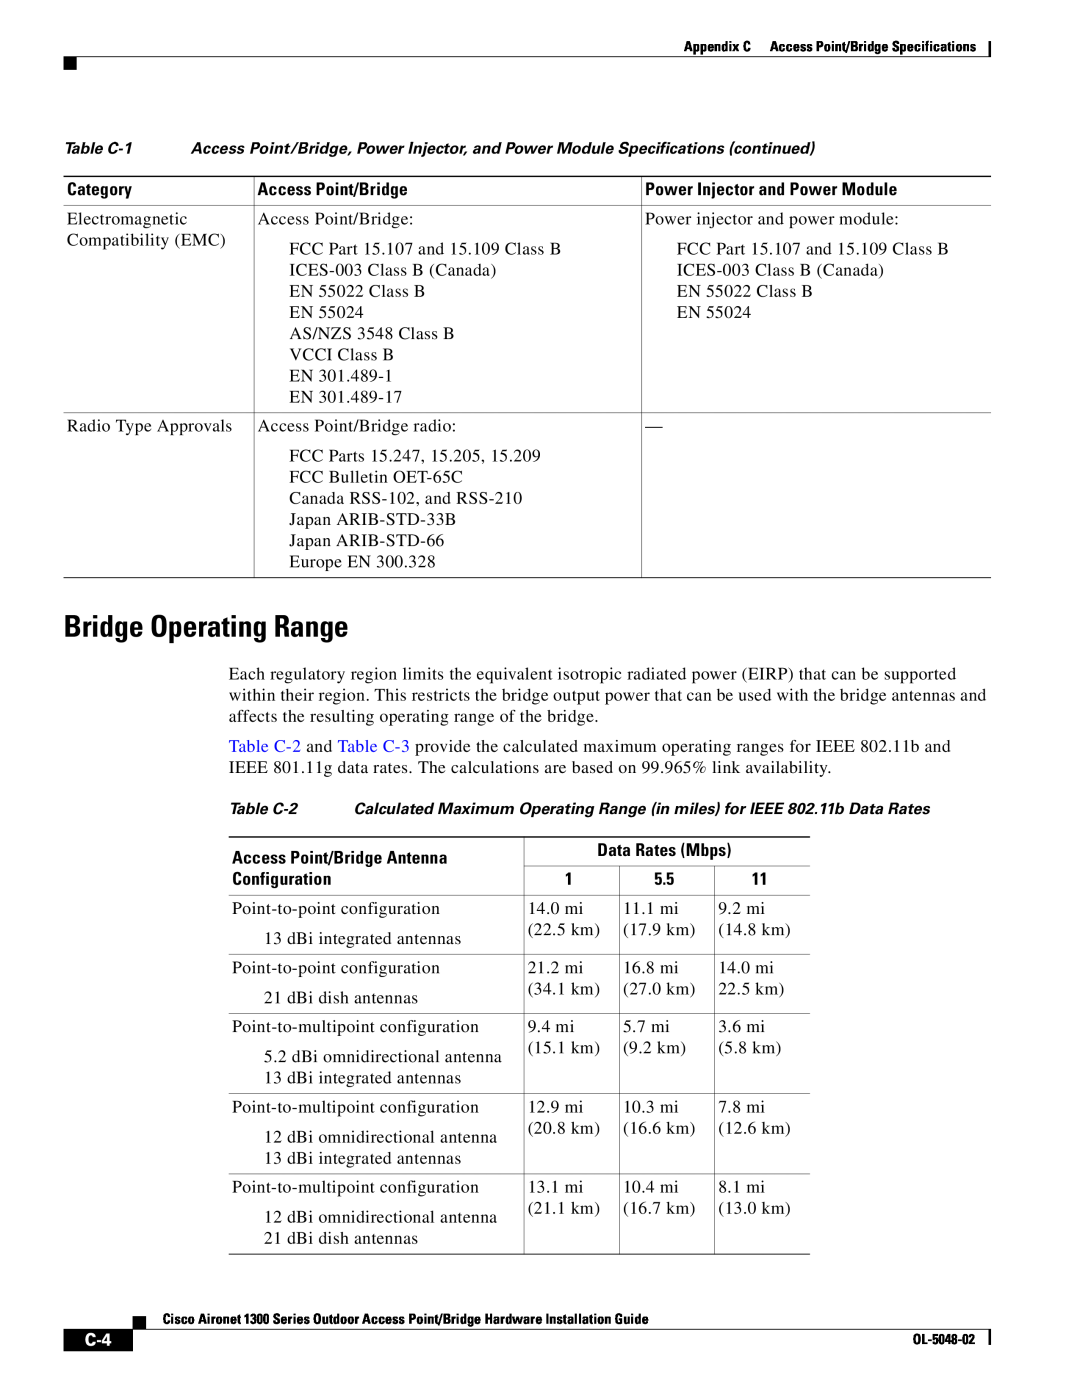 Cisco Systems 1300 Series manual Bridge Operating Range 